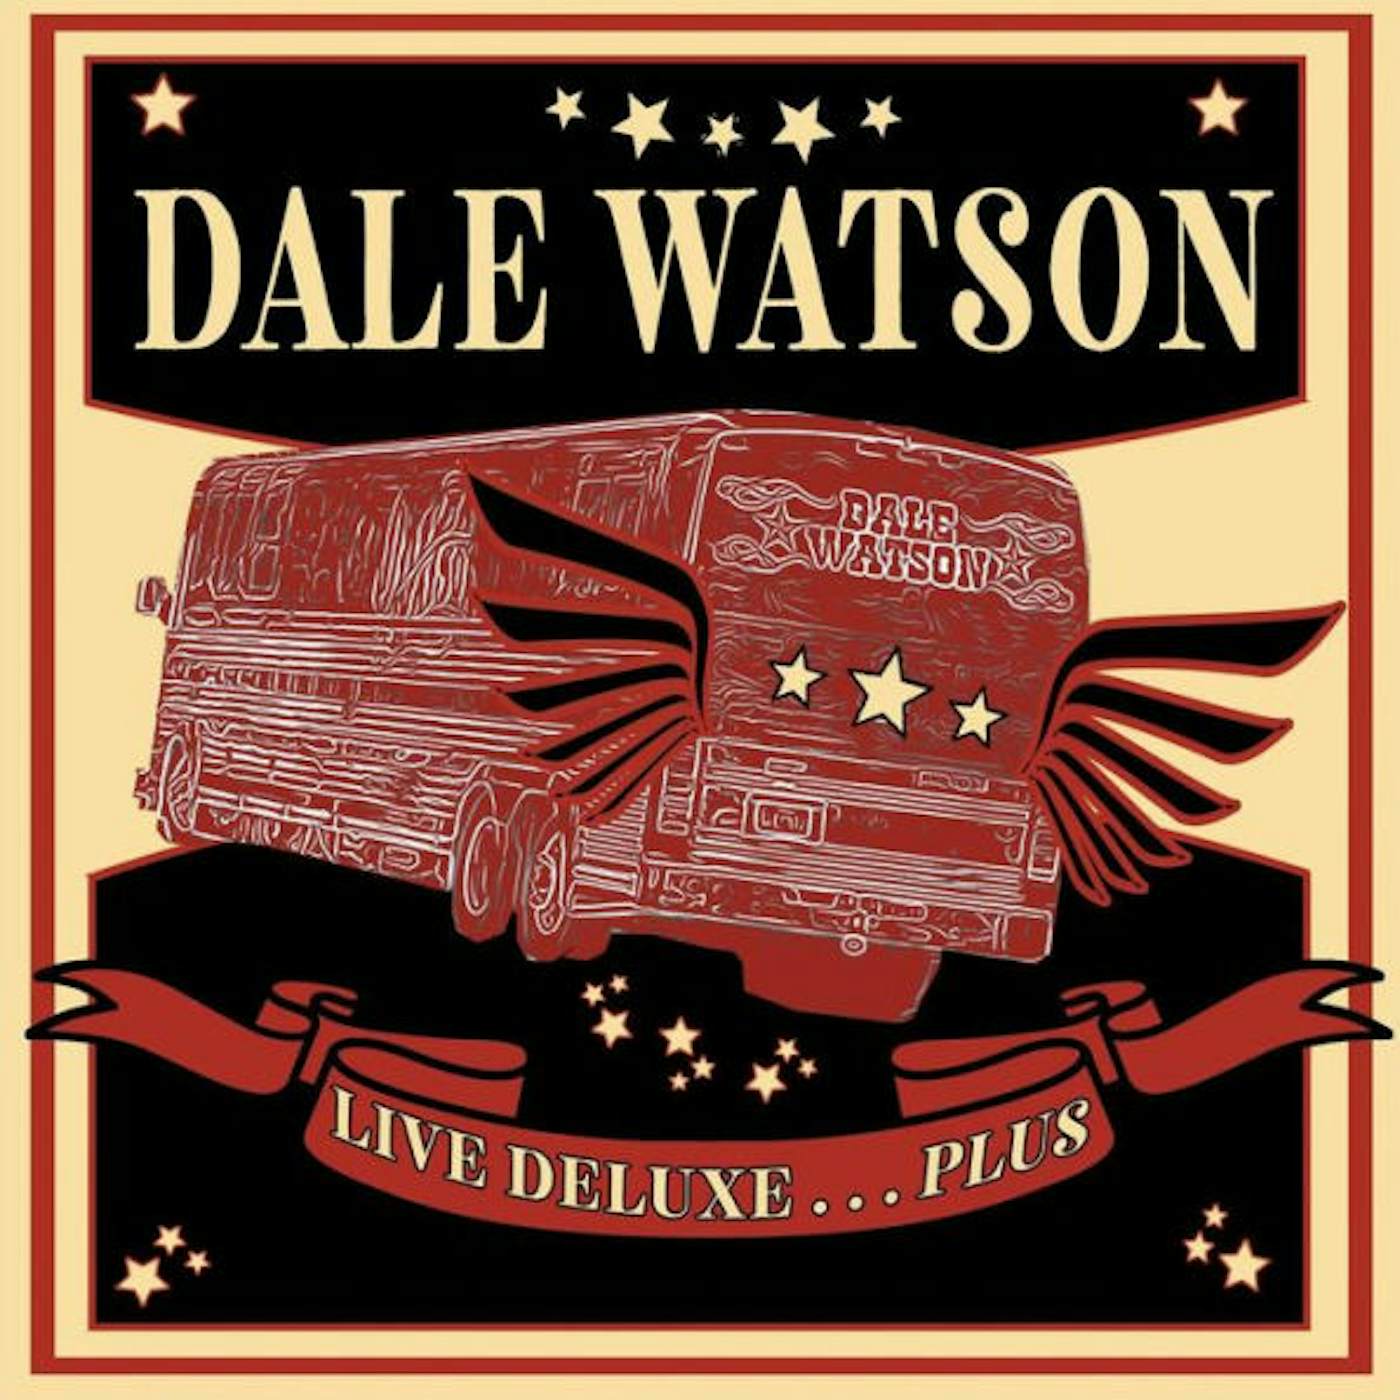 Dale Watson LIVE DELUXE...PLUS CD